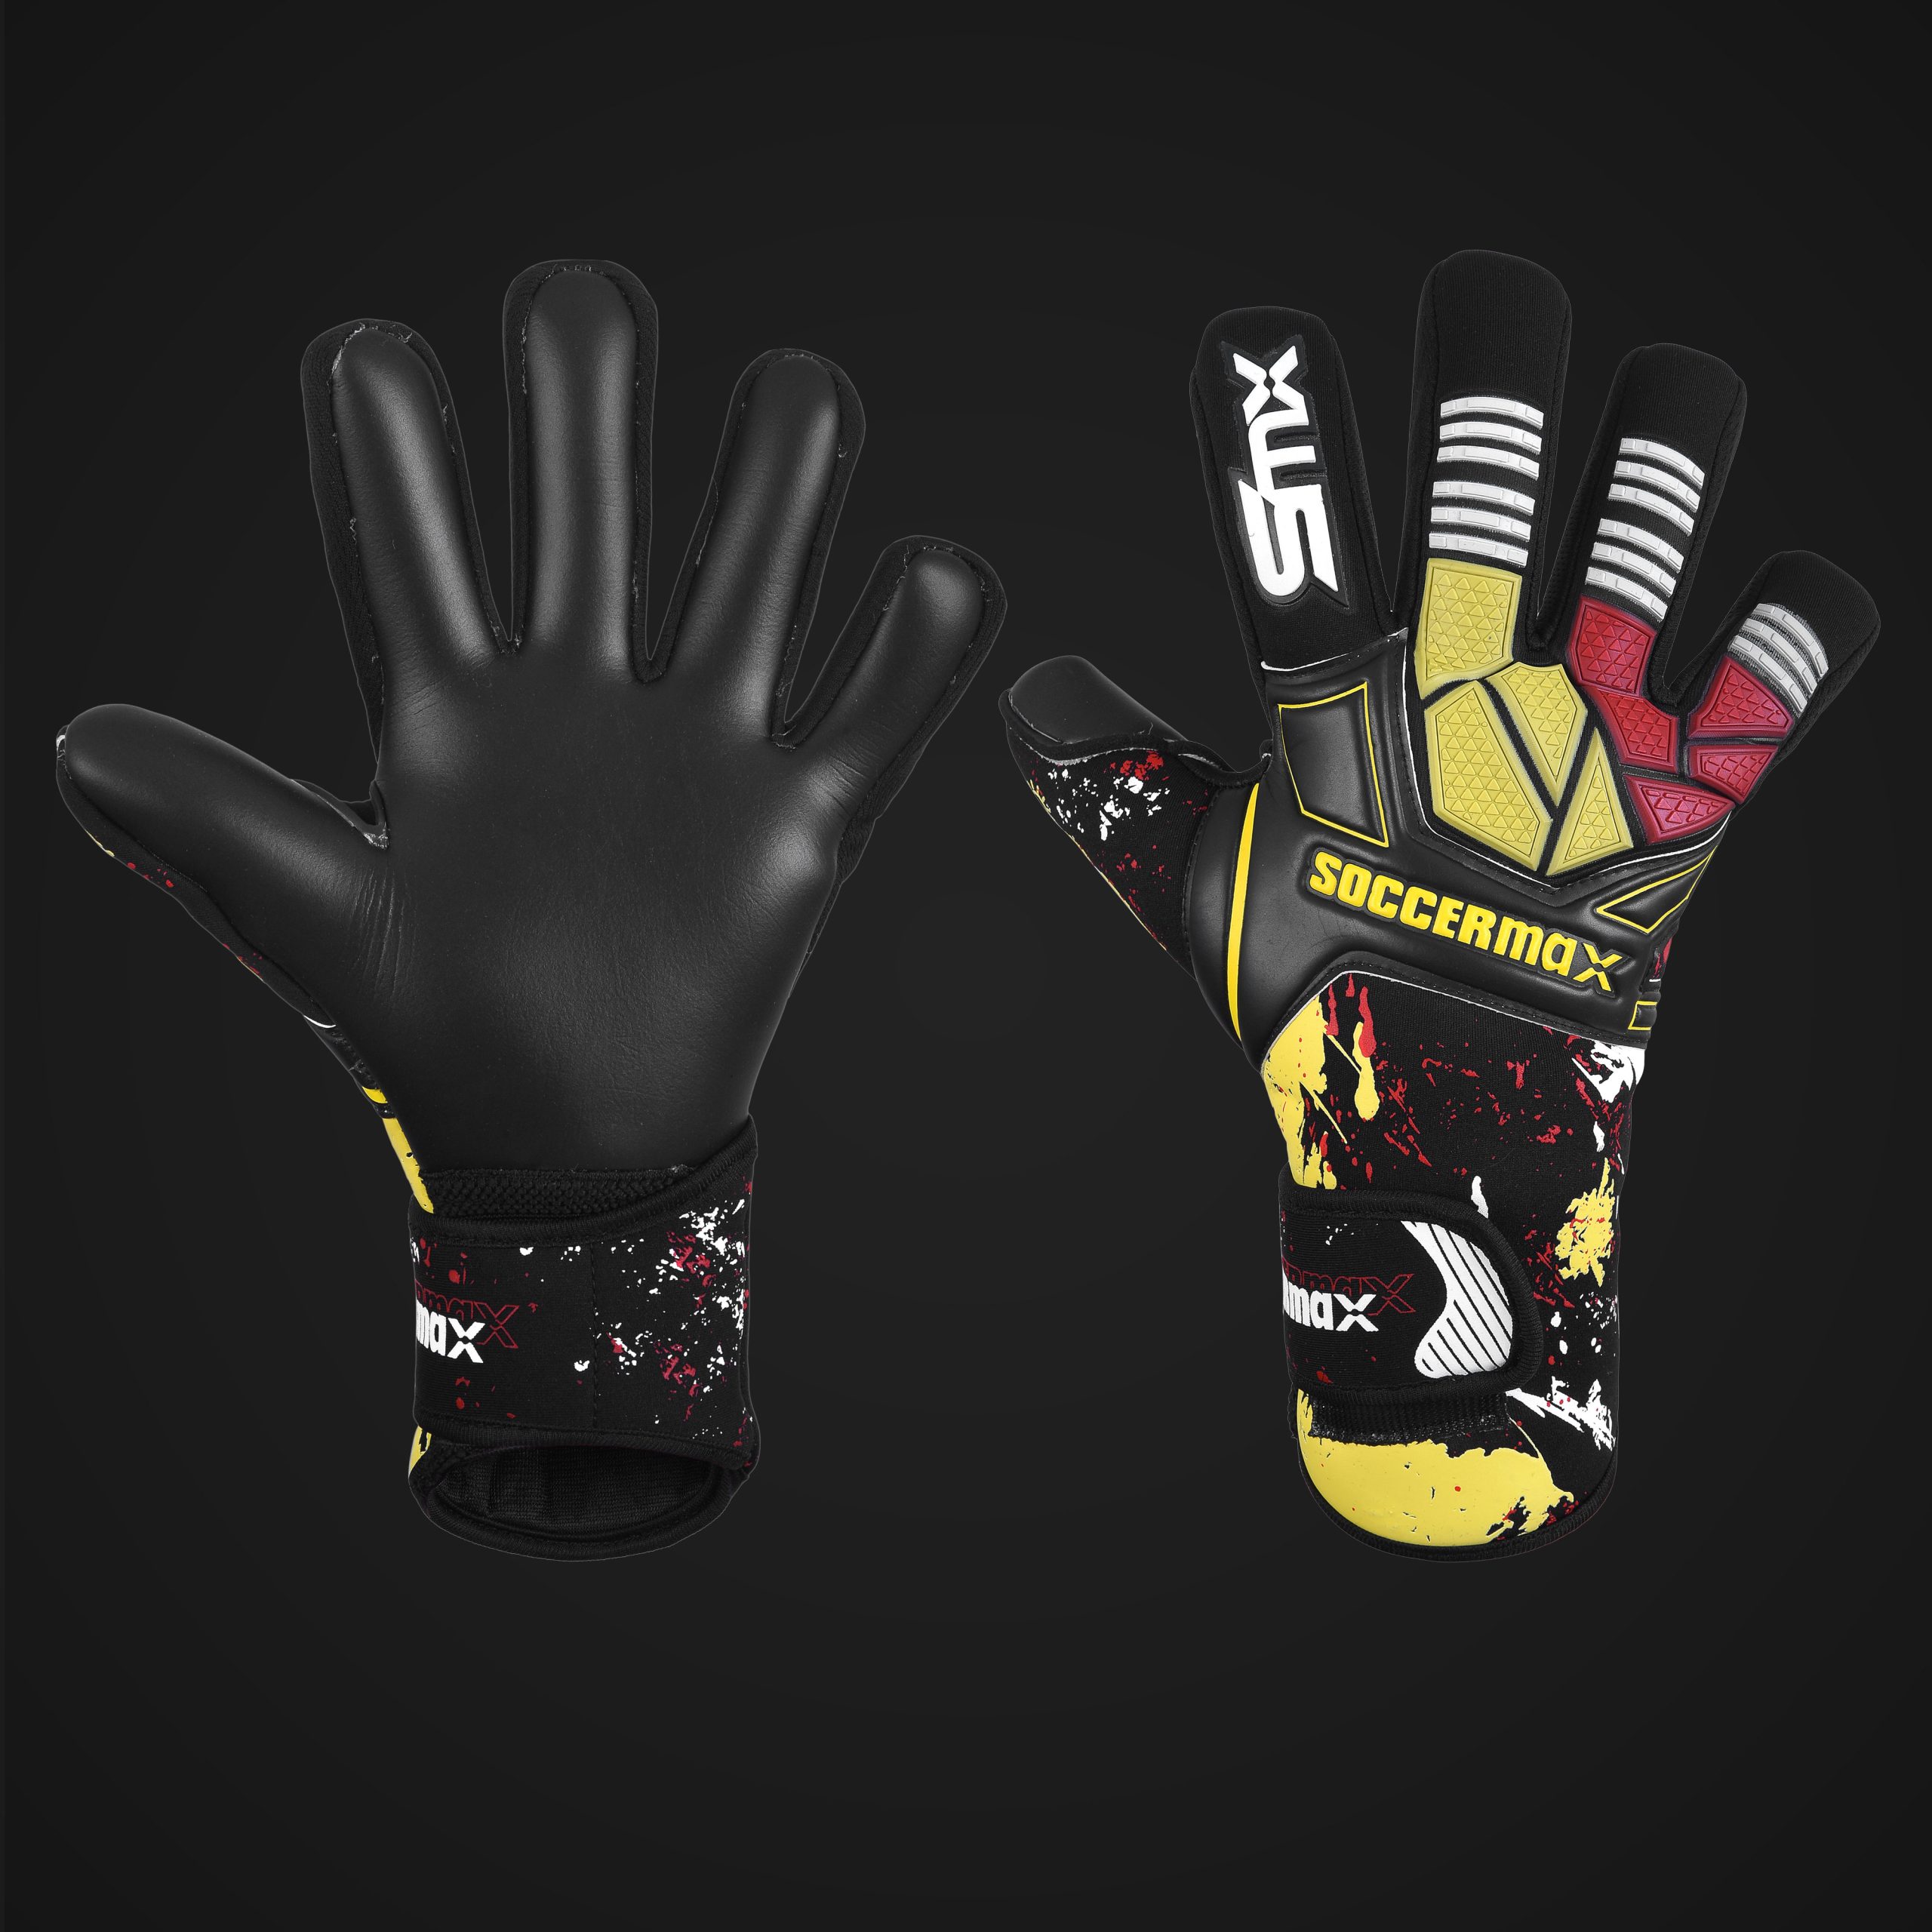 Adidas Predator Pro Goalkeeper Gloves 8